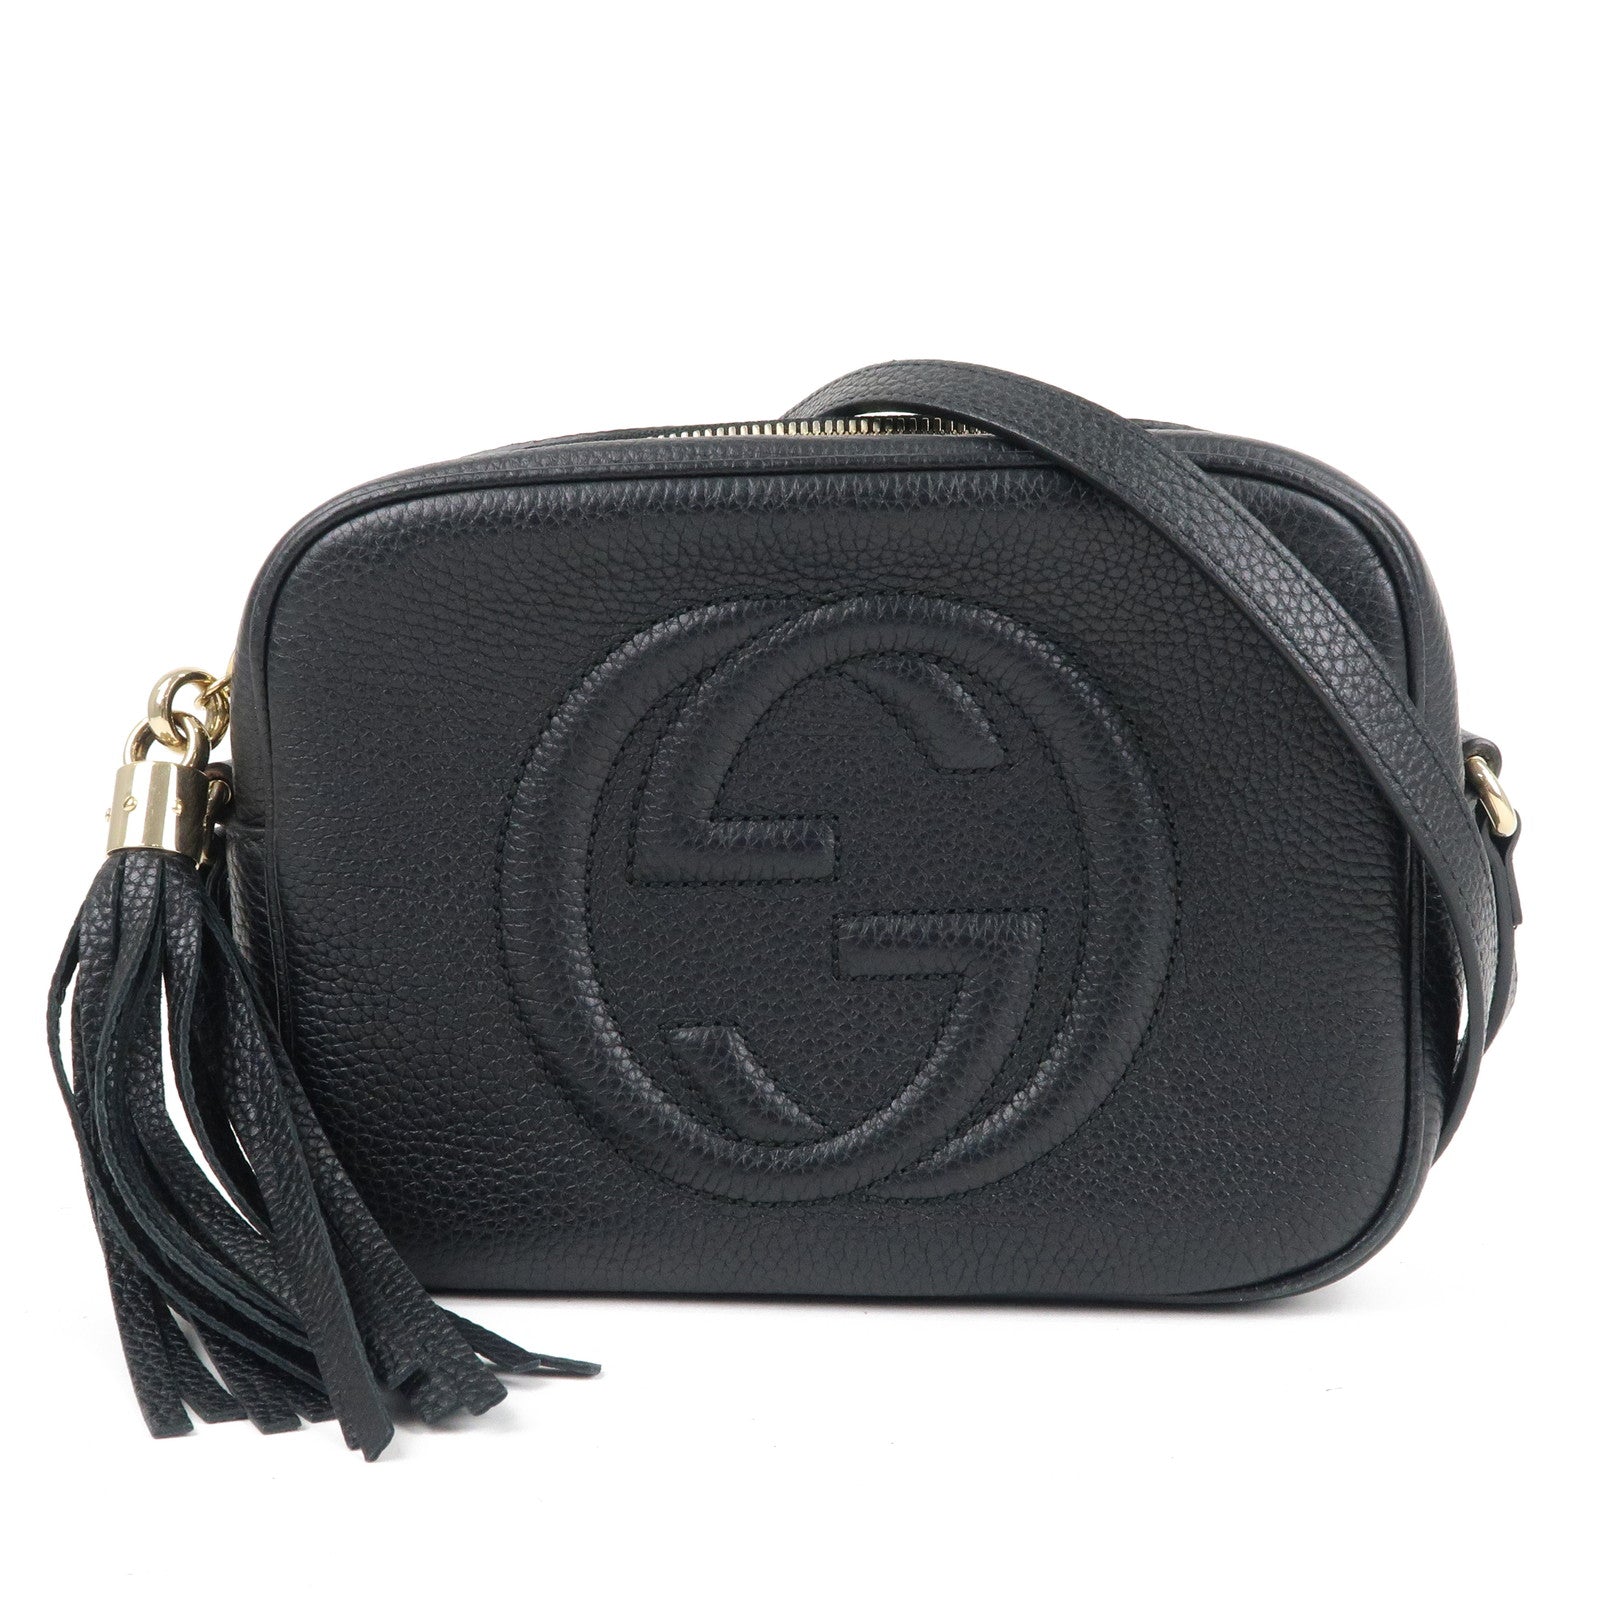 Authentic Gucci Soho Disco Nubuck Leather Crossbody Bag, Luxury